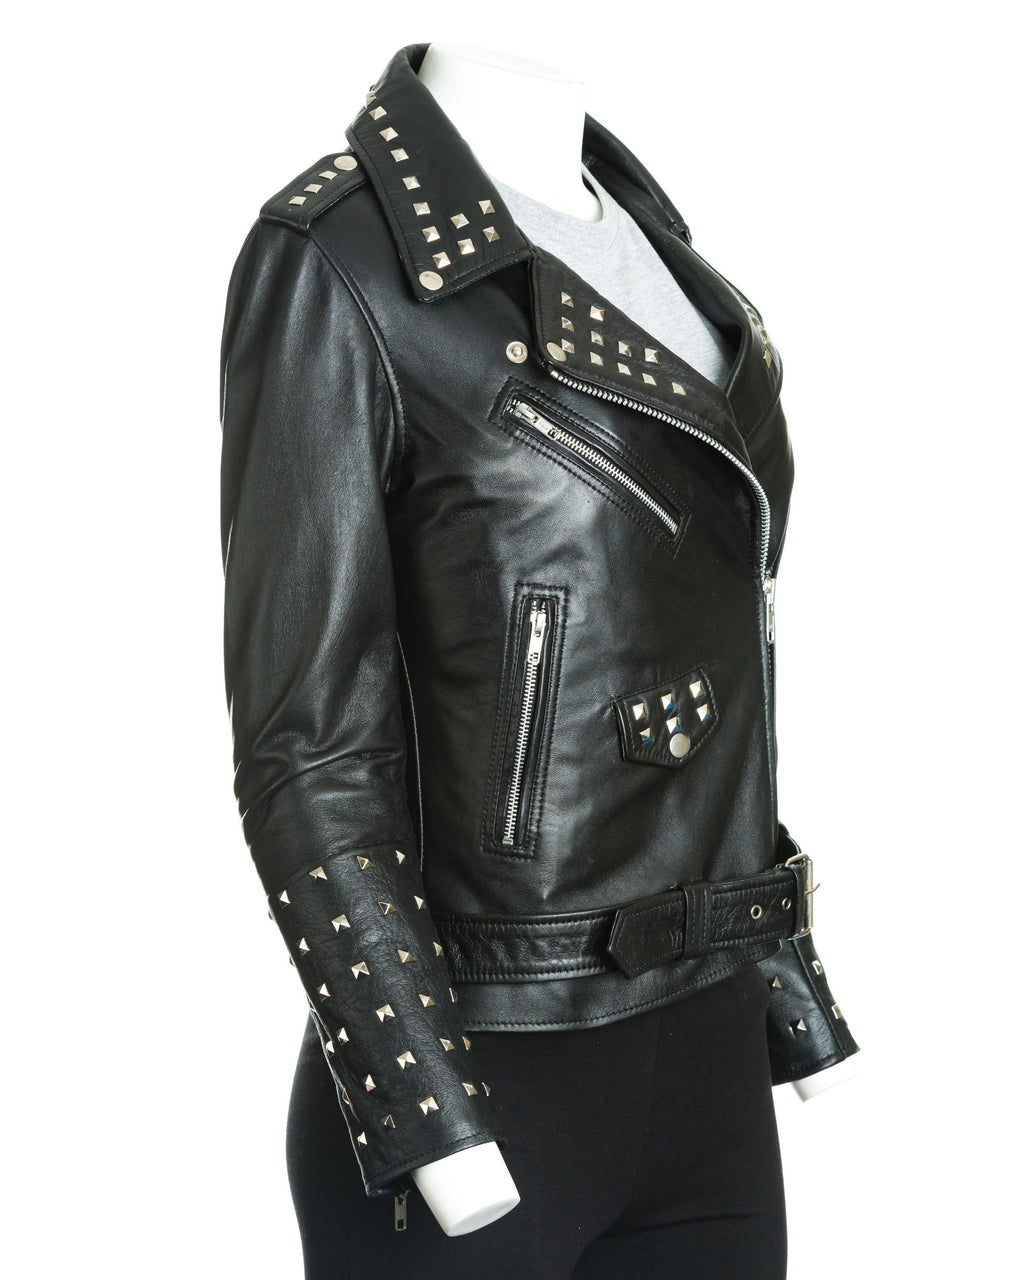 Women's Brando Style Leather Jacket With Studded Detail: Felipa